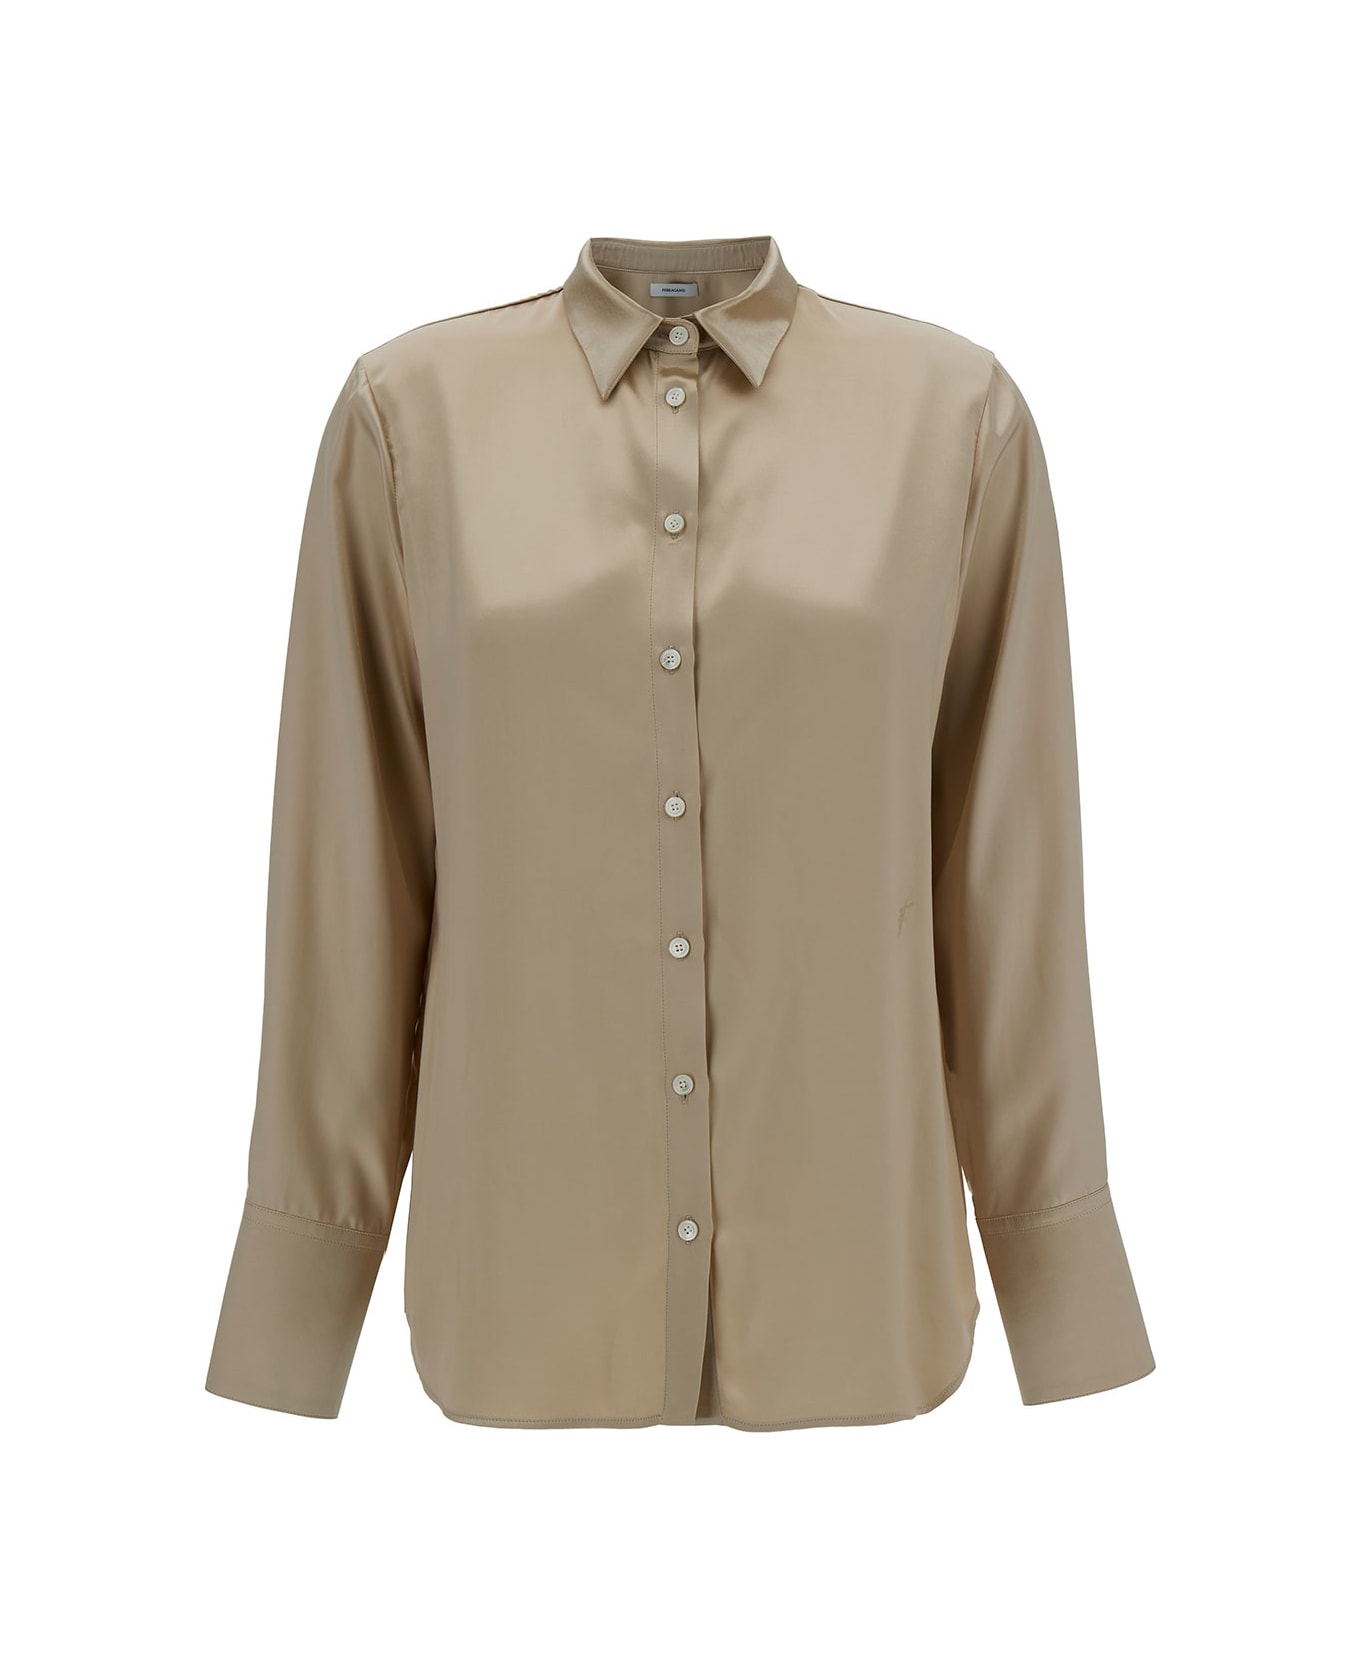 Ferragamo Beige Loose Shirt With Classic Collar In Rayon Woman - Beige